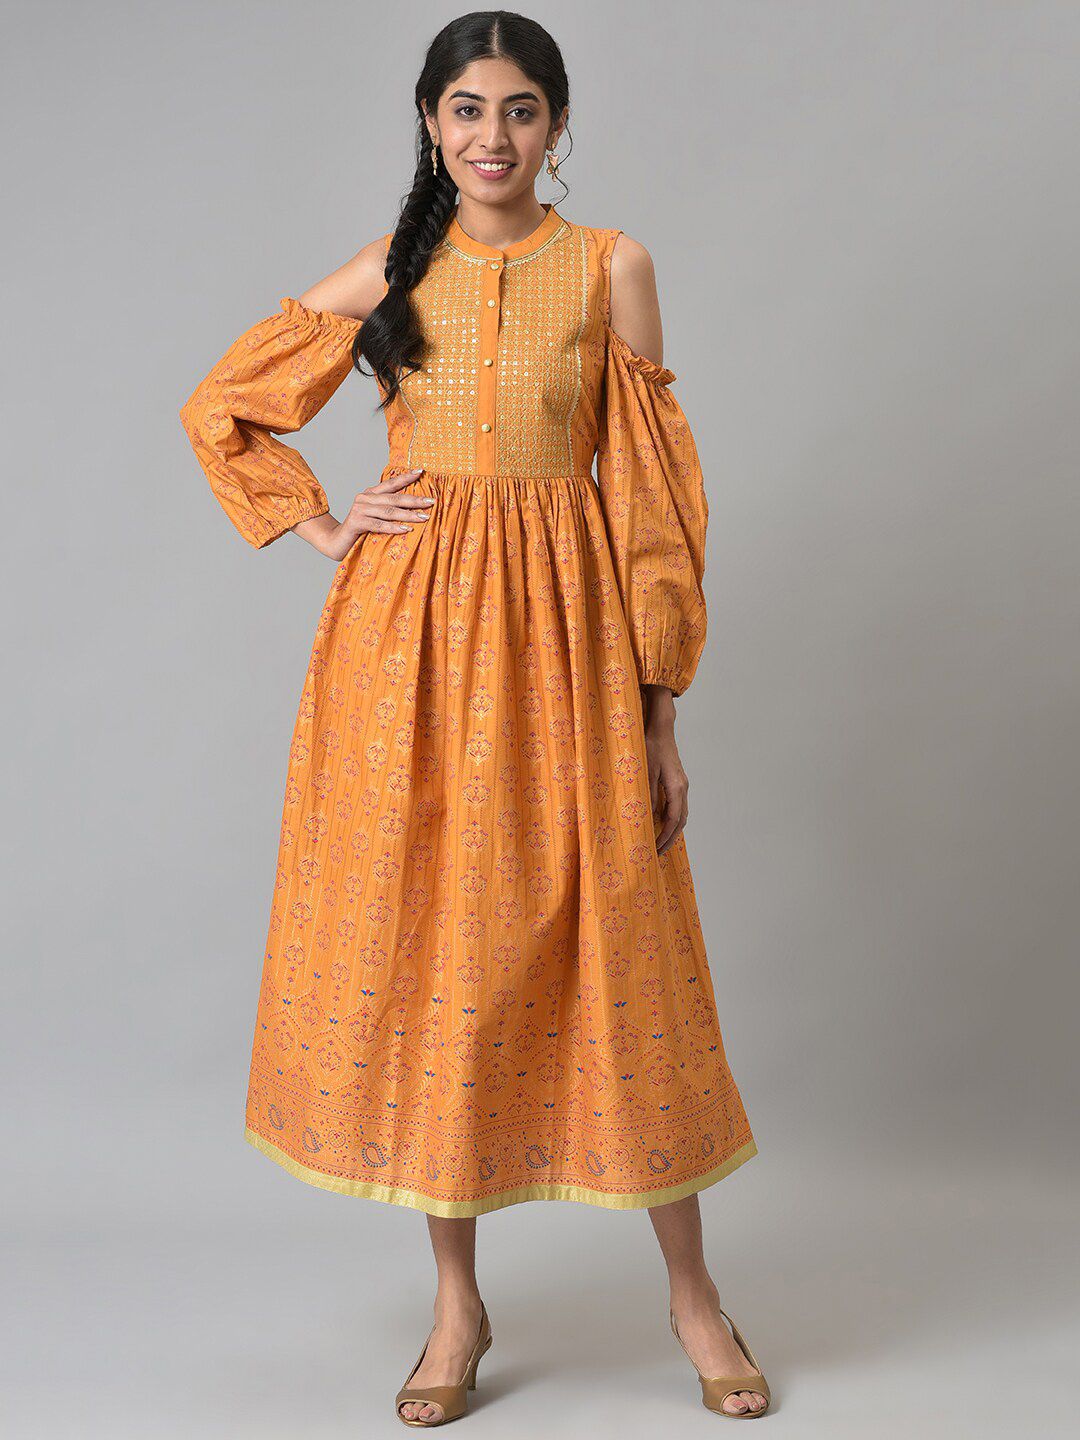 AURELIA Yellow Ethnic Motifs A-Line Midi Dress Price in India